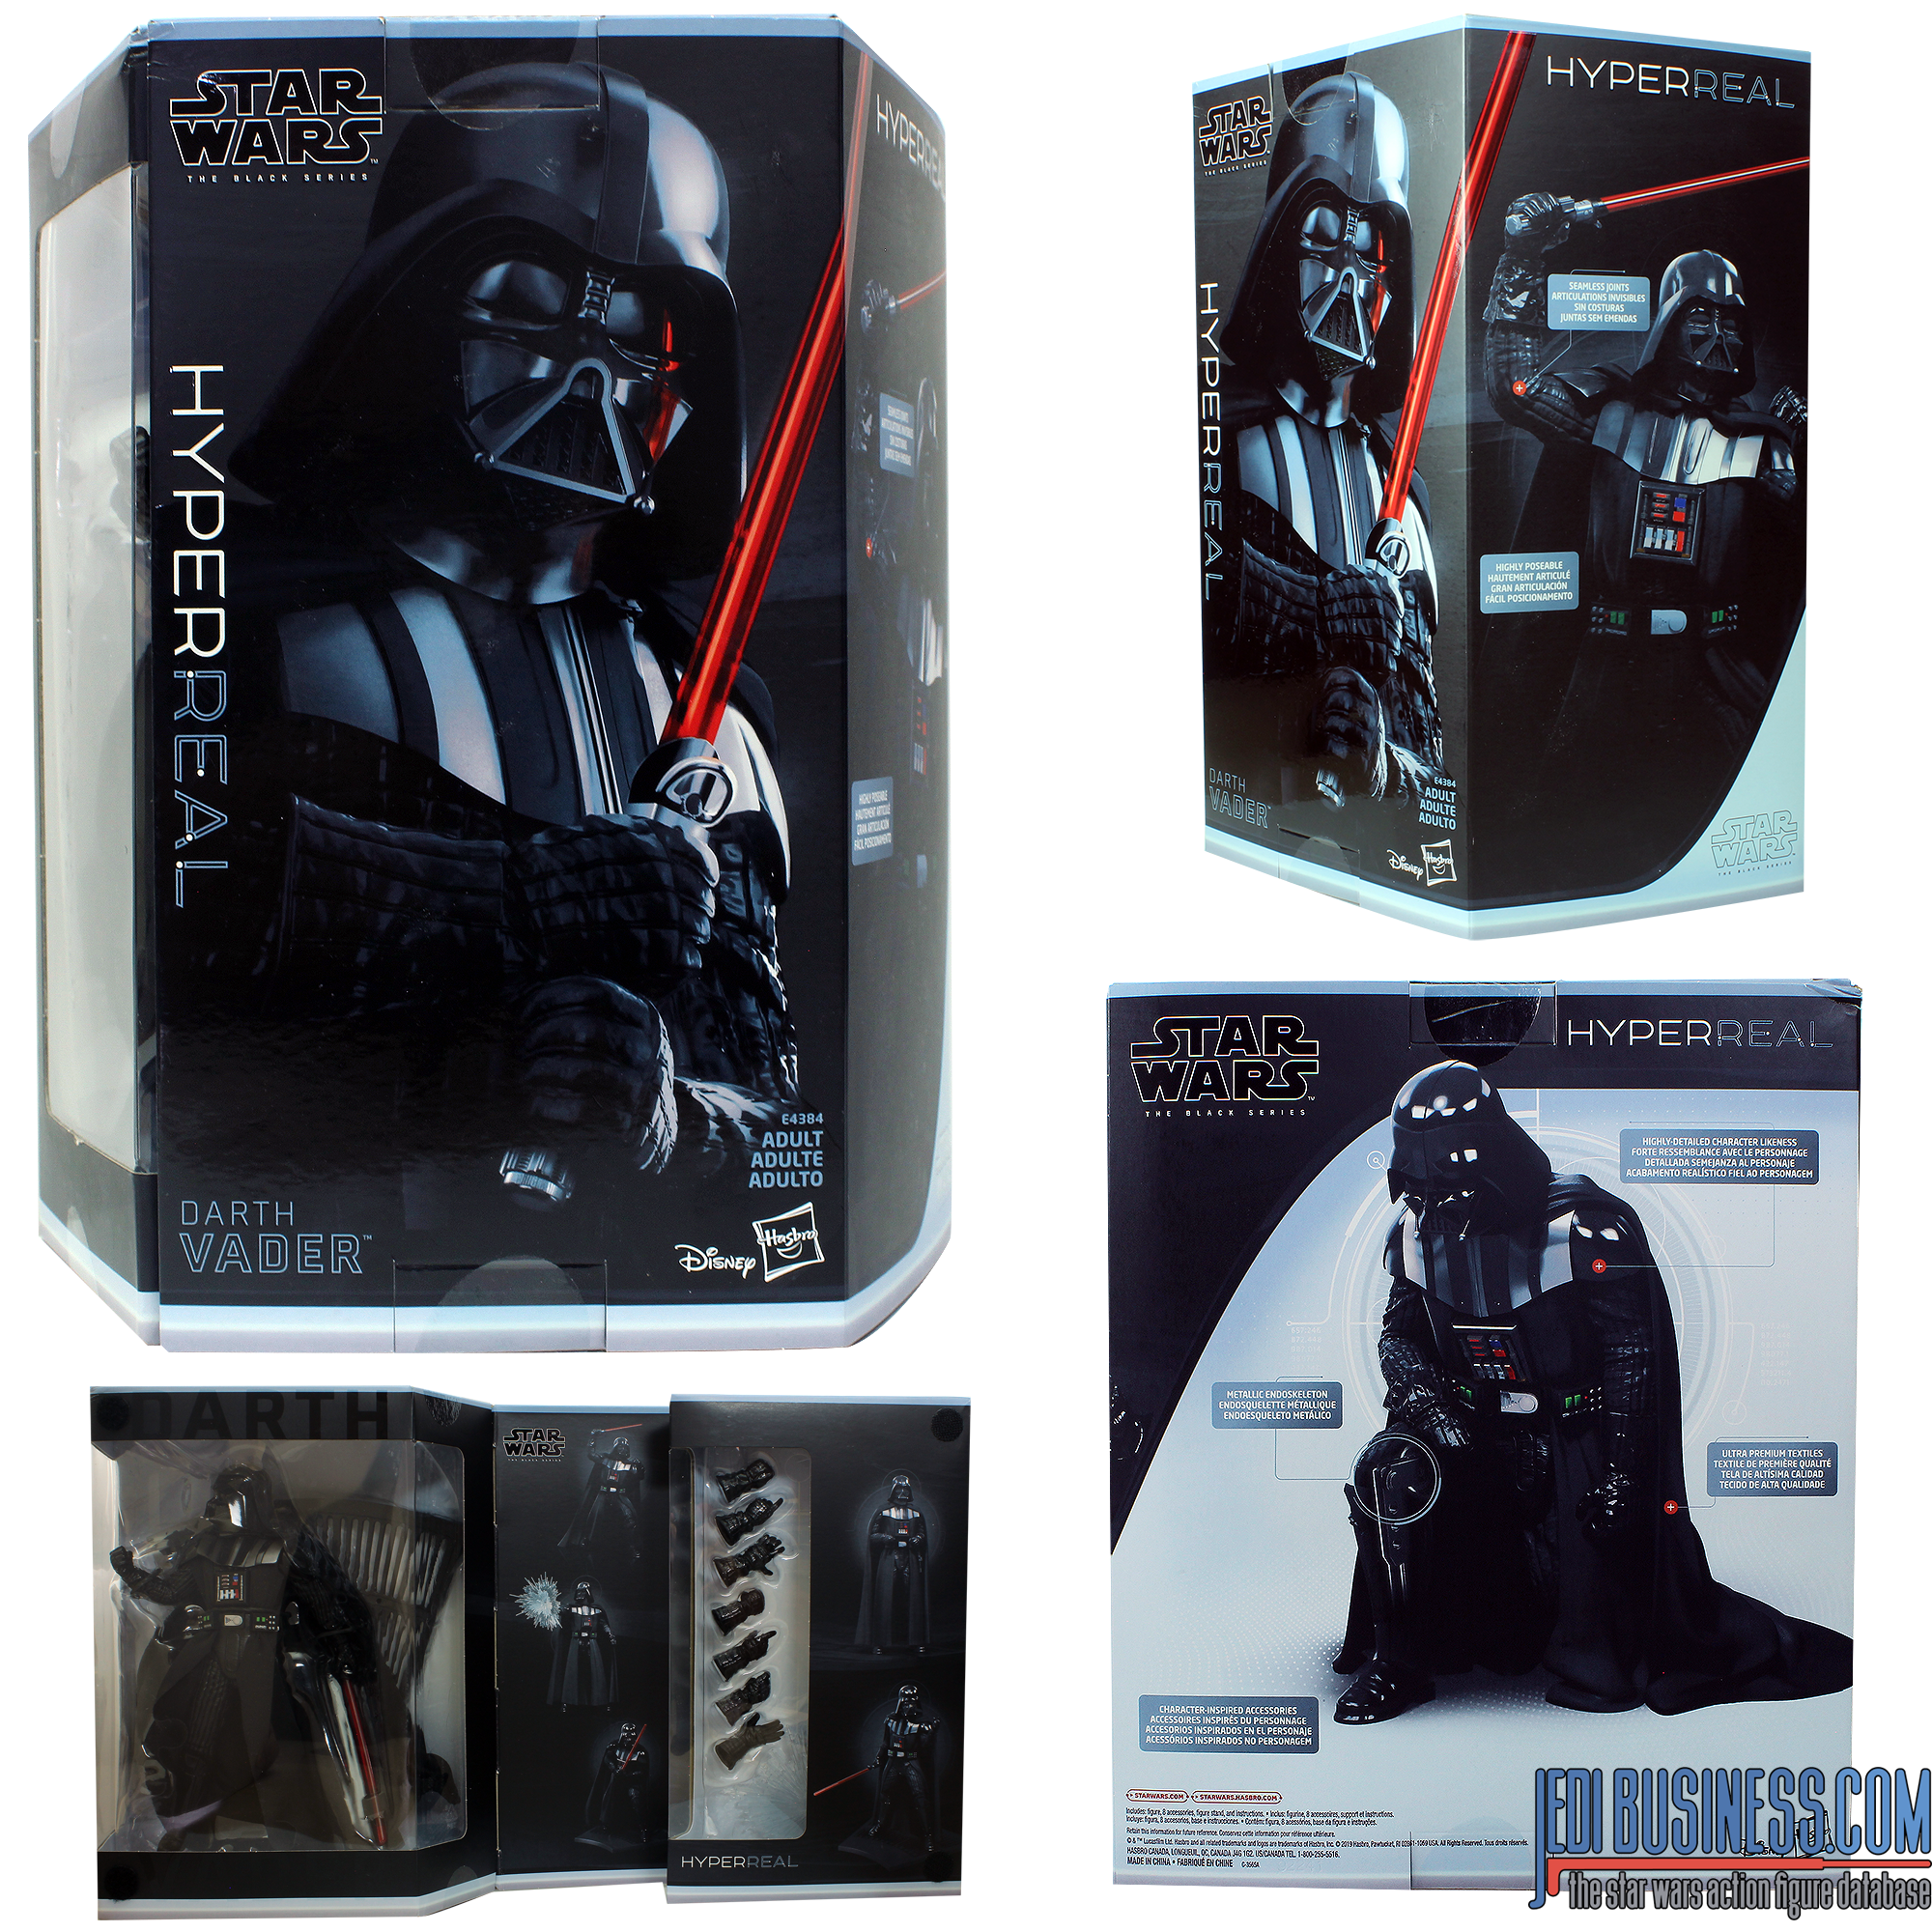 Hyperreal Darth Vader Packaging